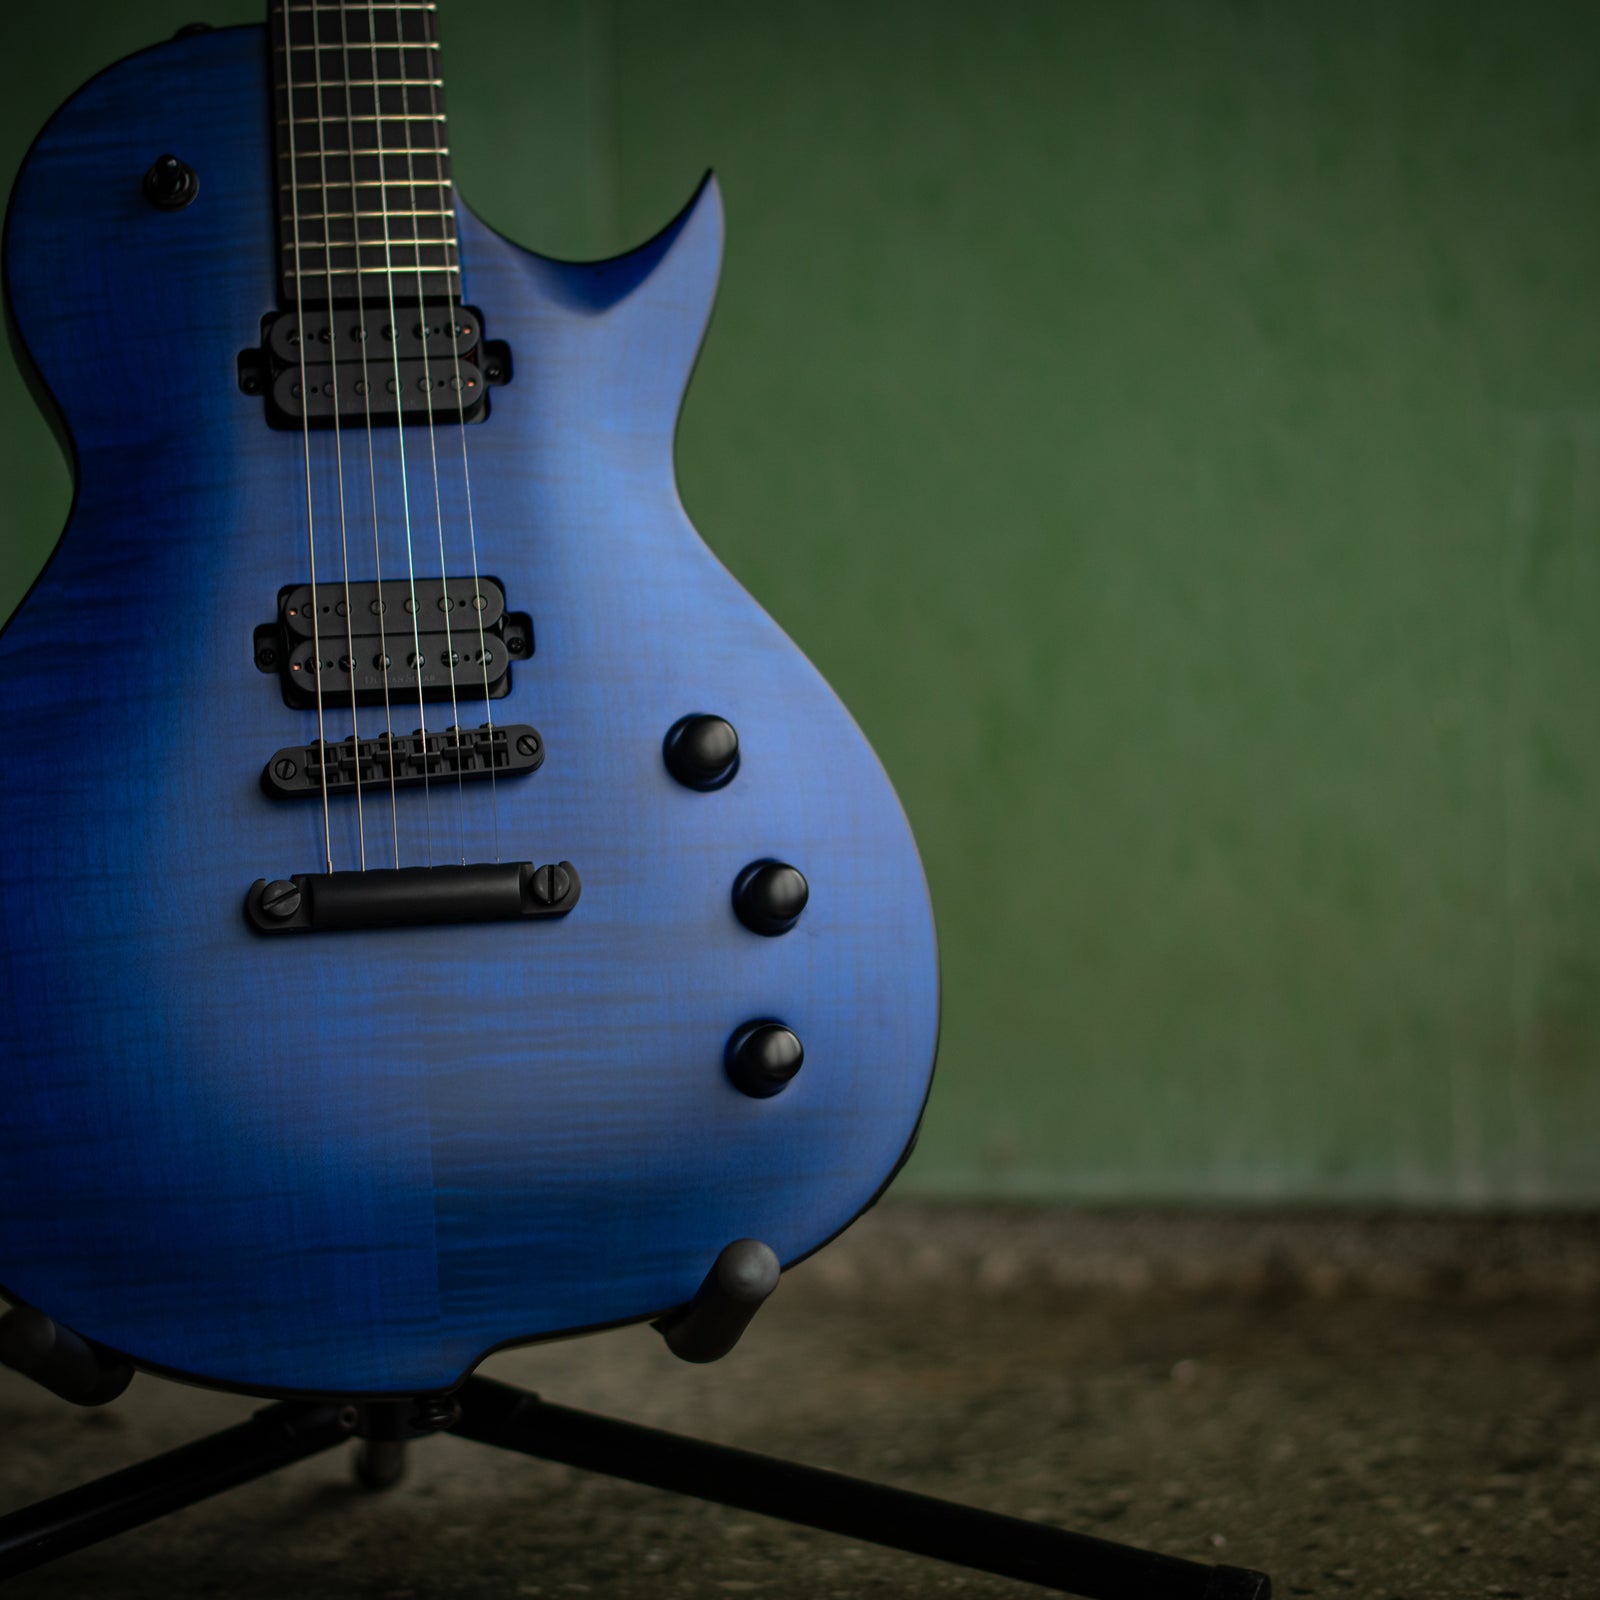 SOLAR GC2.6FBL Electric Guitar - Flame Blue Matte